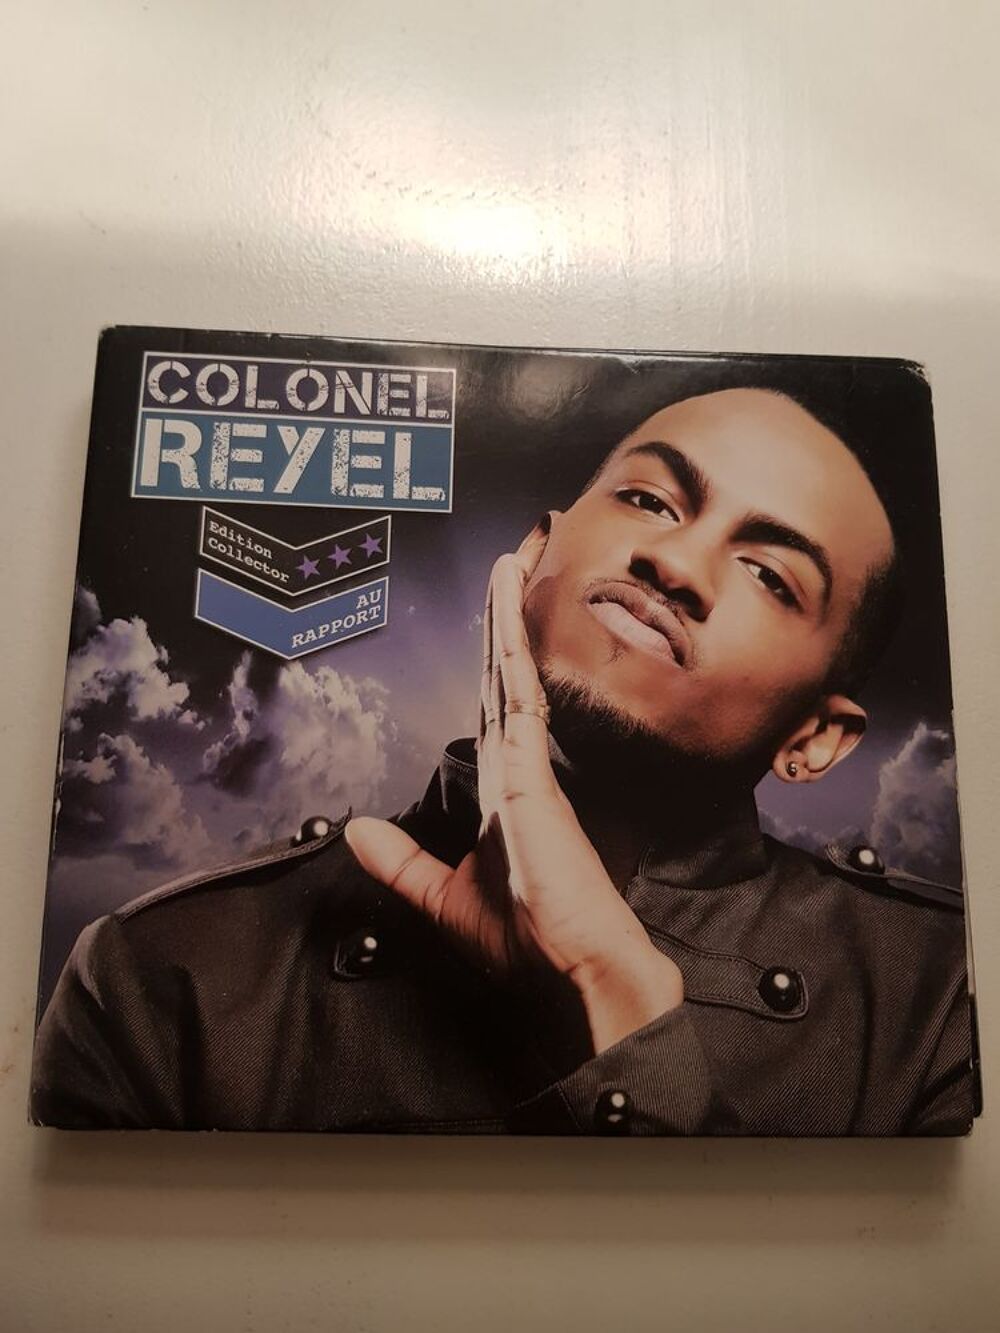 COLONEL REYEL AU RAPPORT Edition Collector CD+DVD CD et vinyles